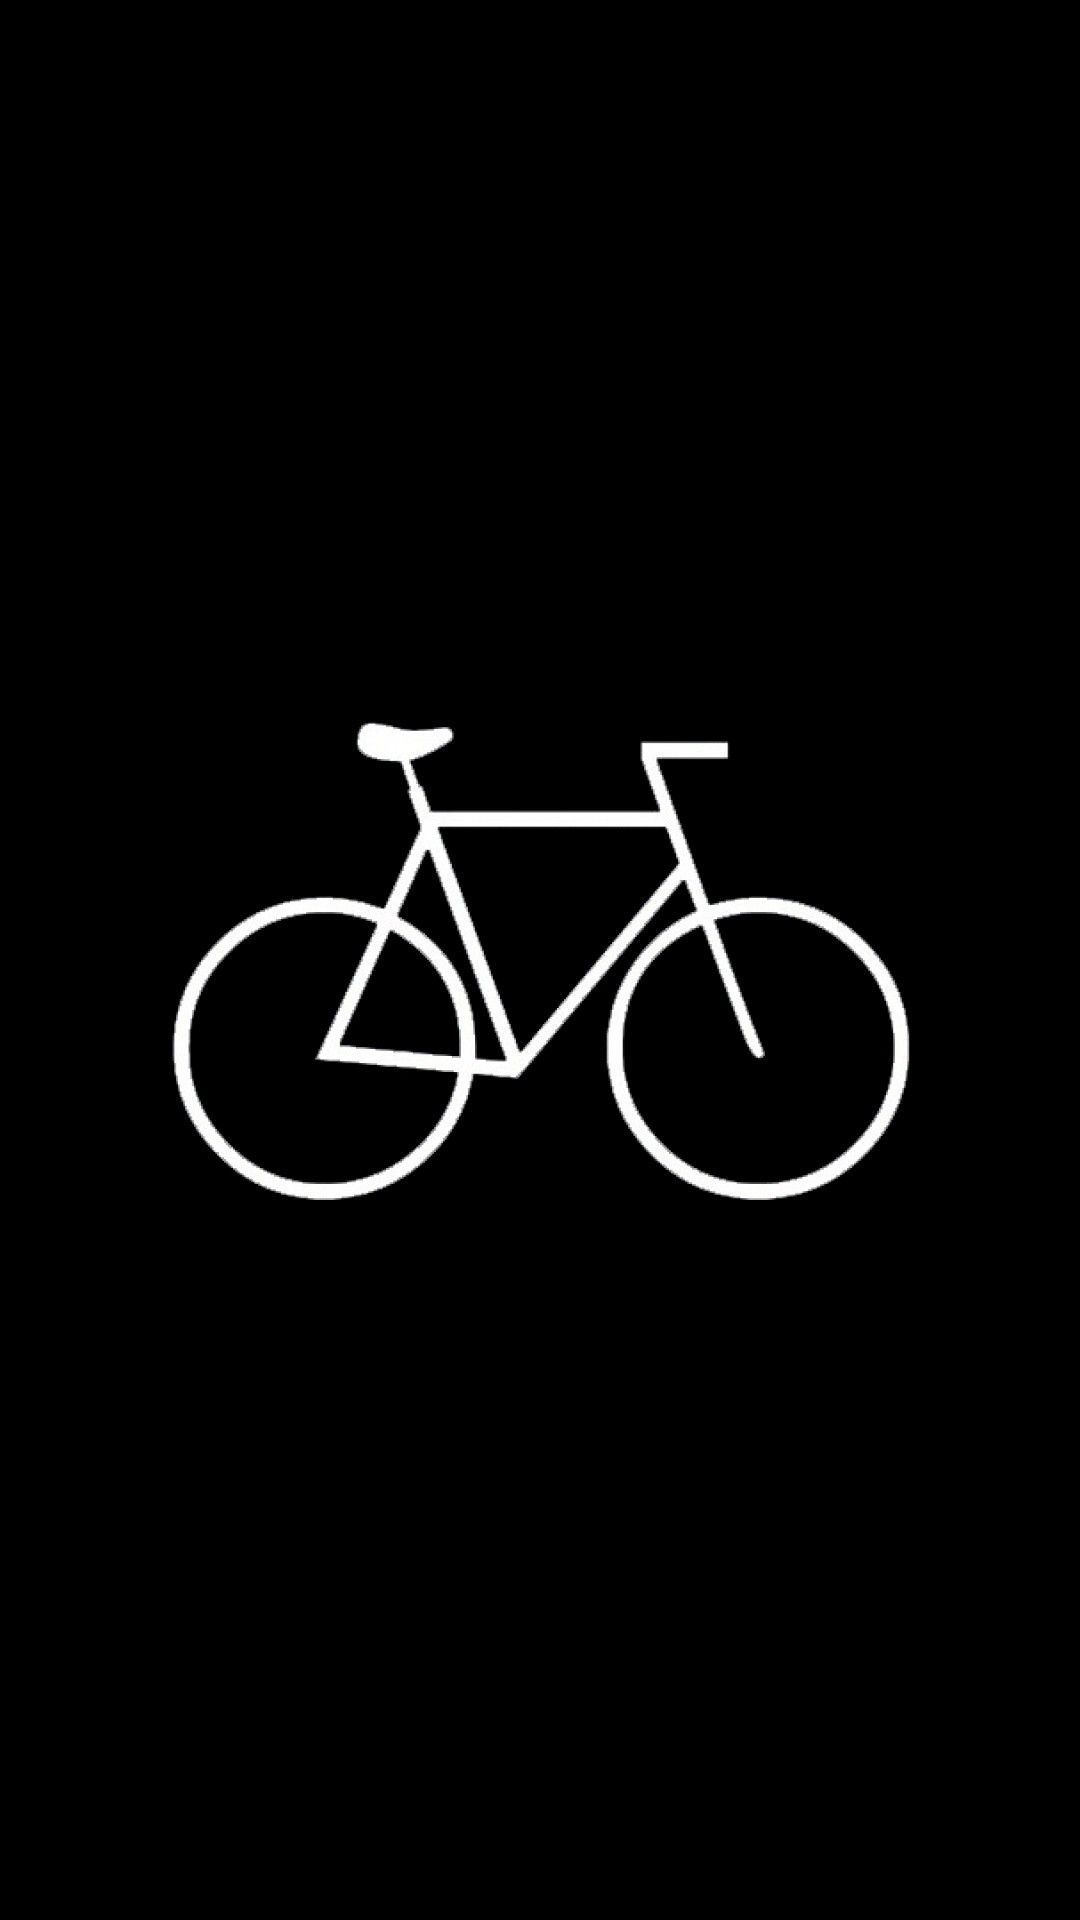 Fondos de pantalla de bicicletas - FondosMil